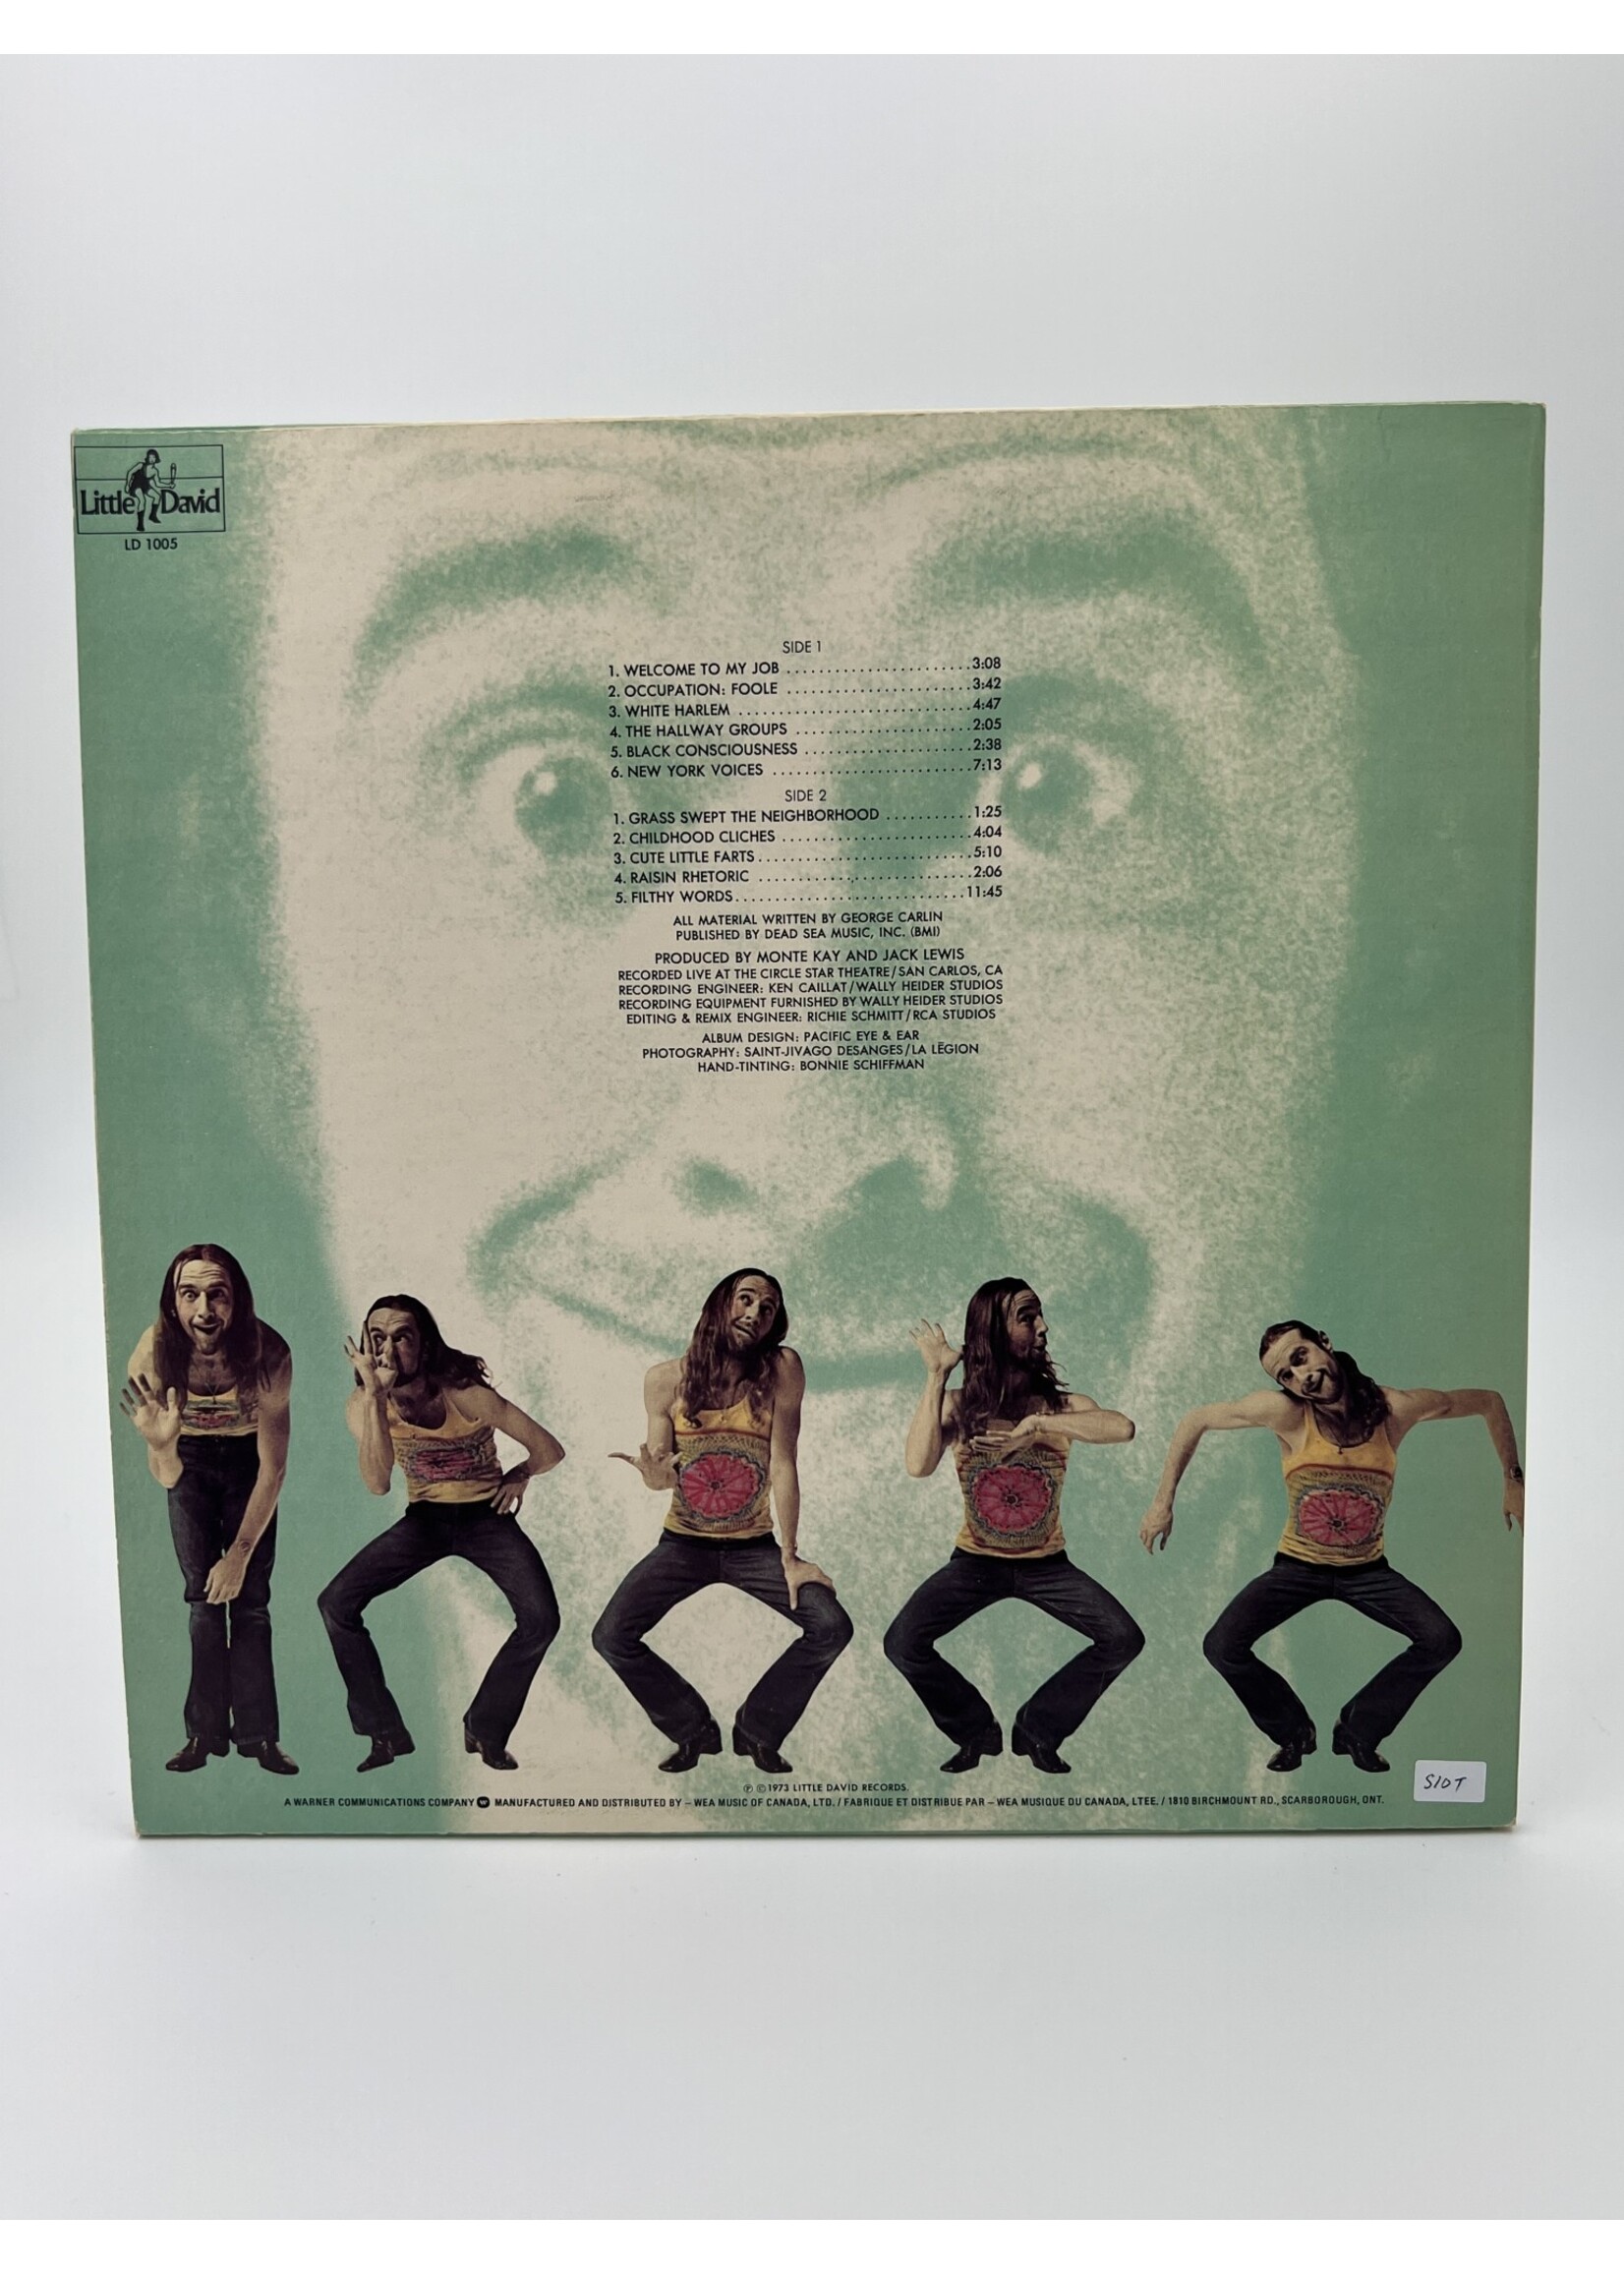 LP   George Carlin Occupation Foole LP Record